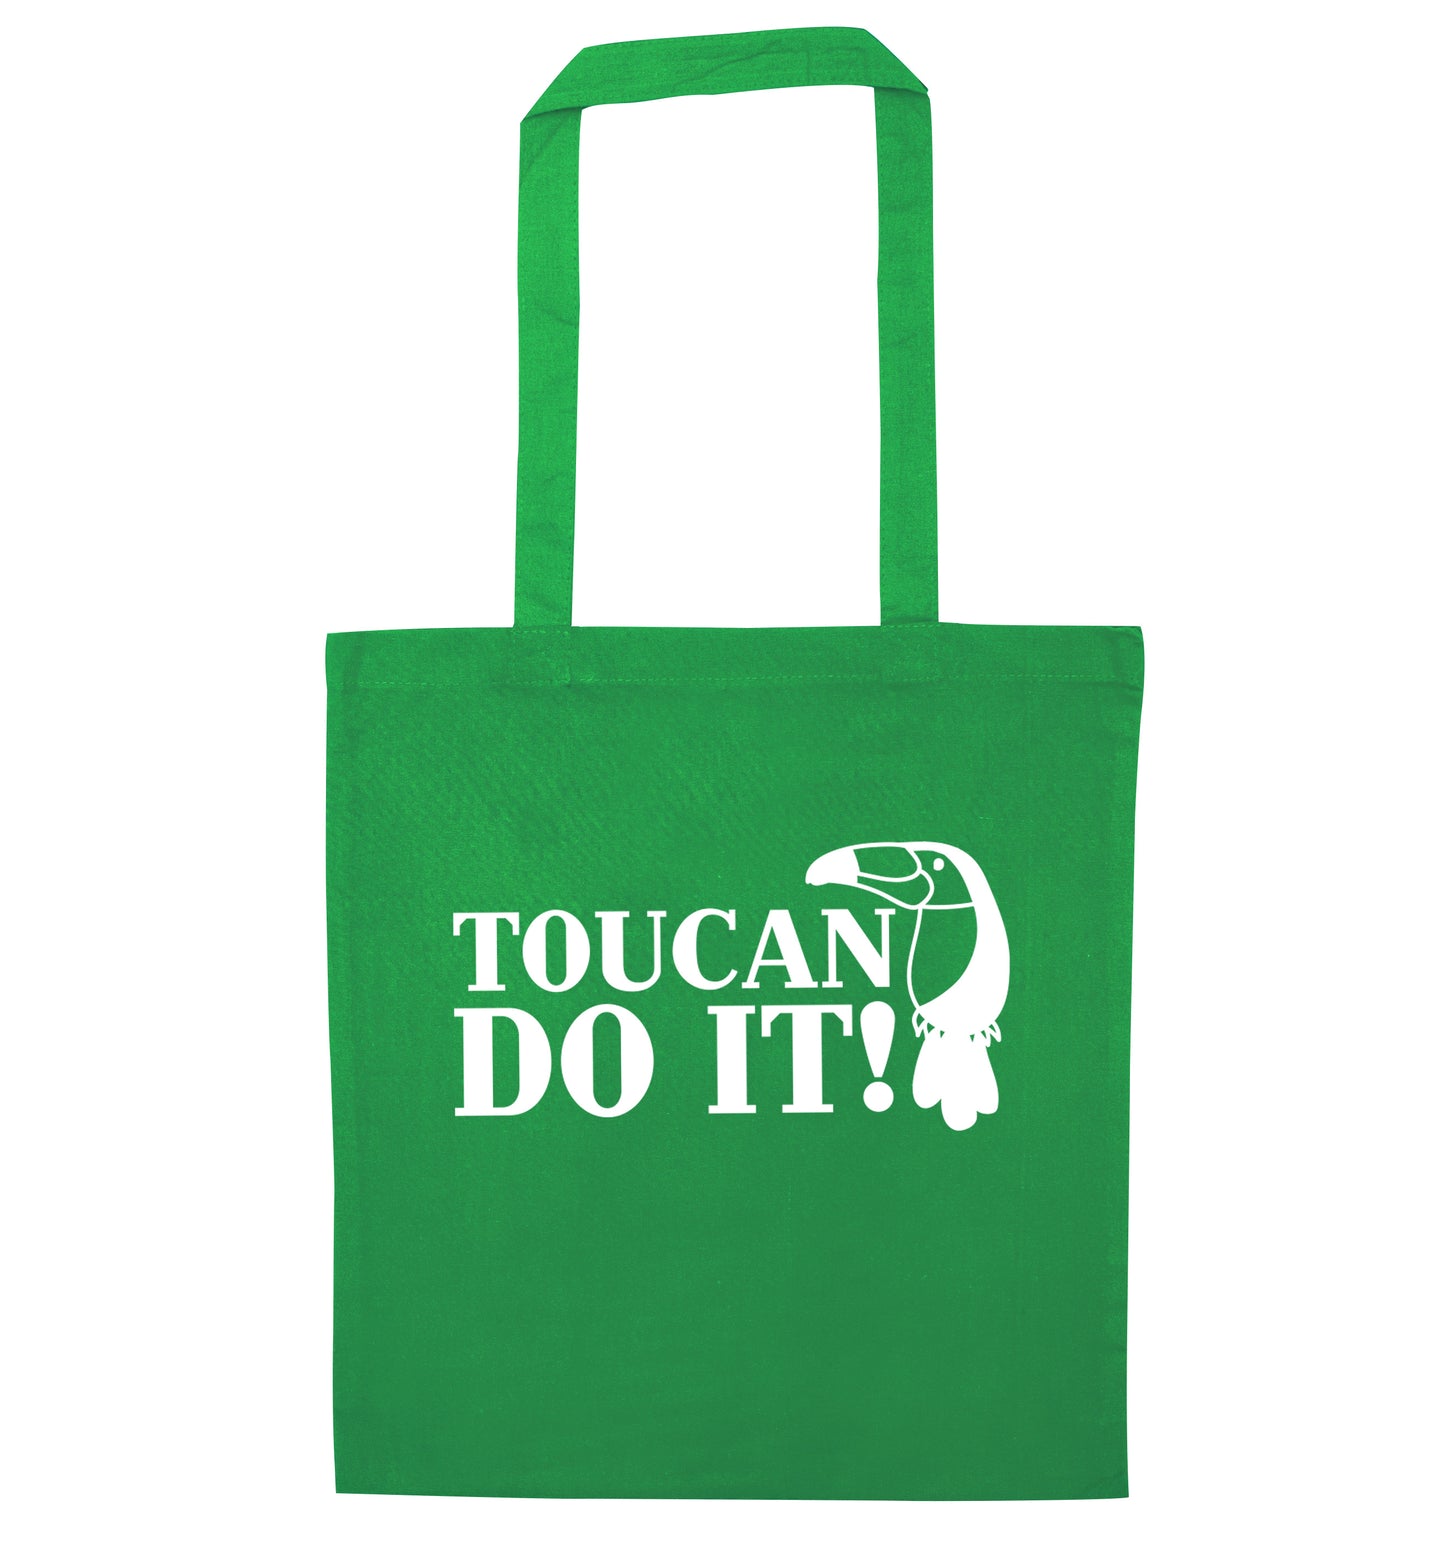 Toucan do it! green tote bag